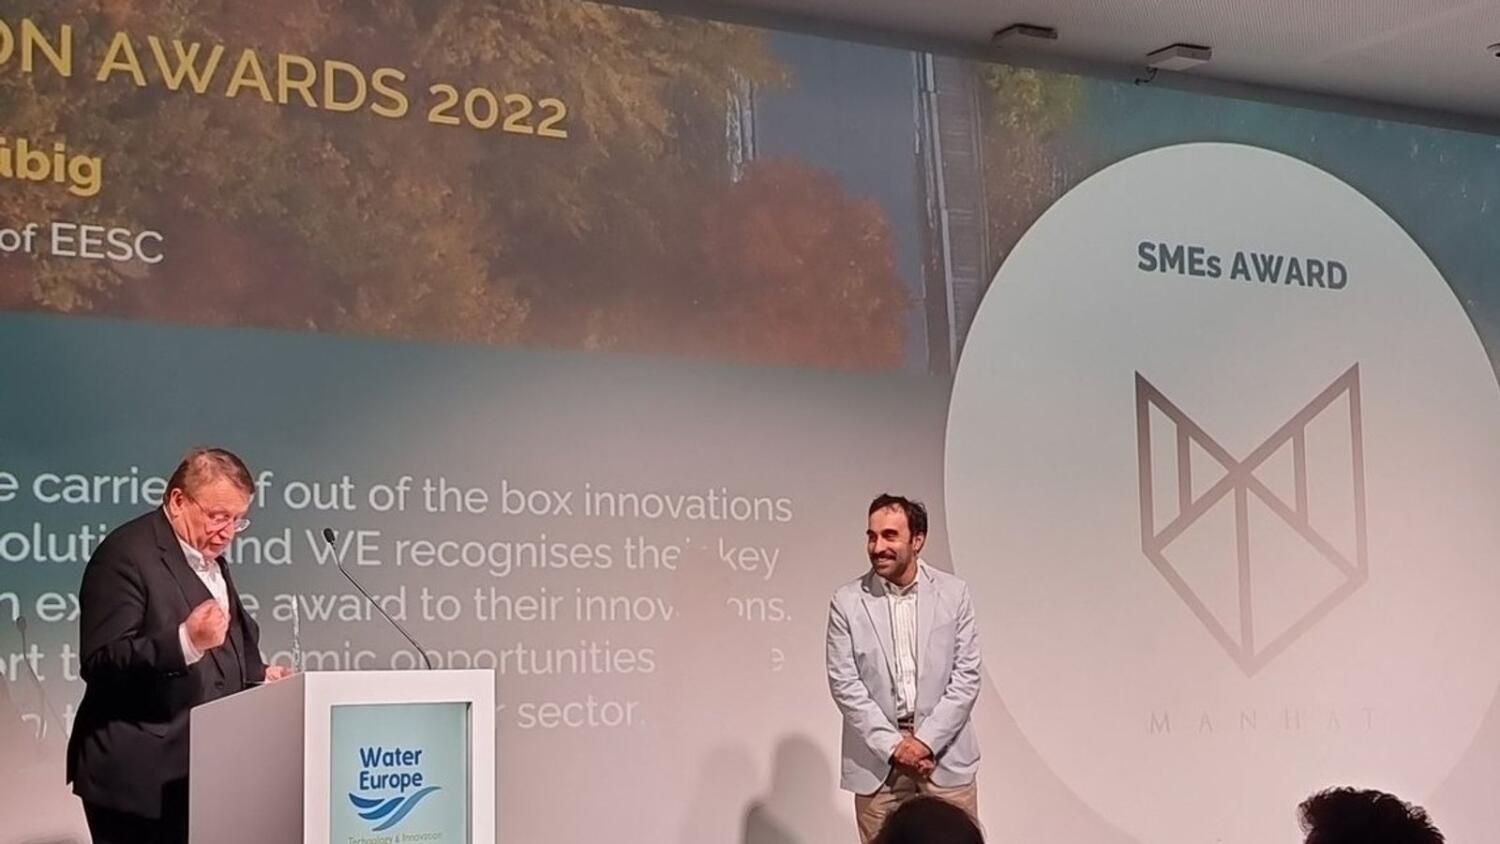 UAE: Local startup wins Europe innovation award